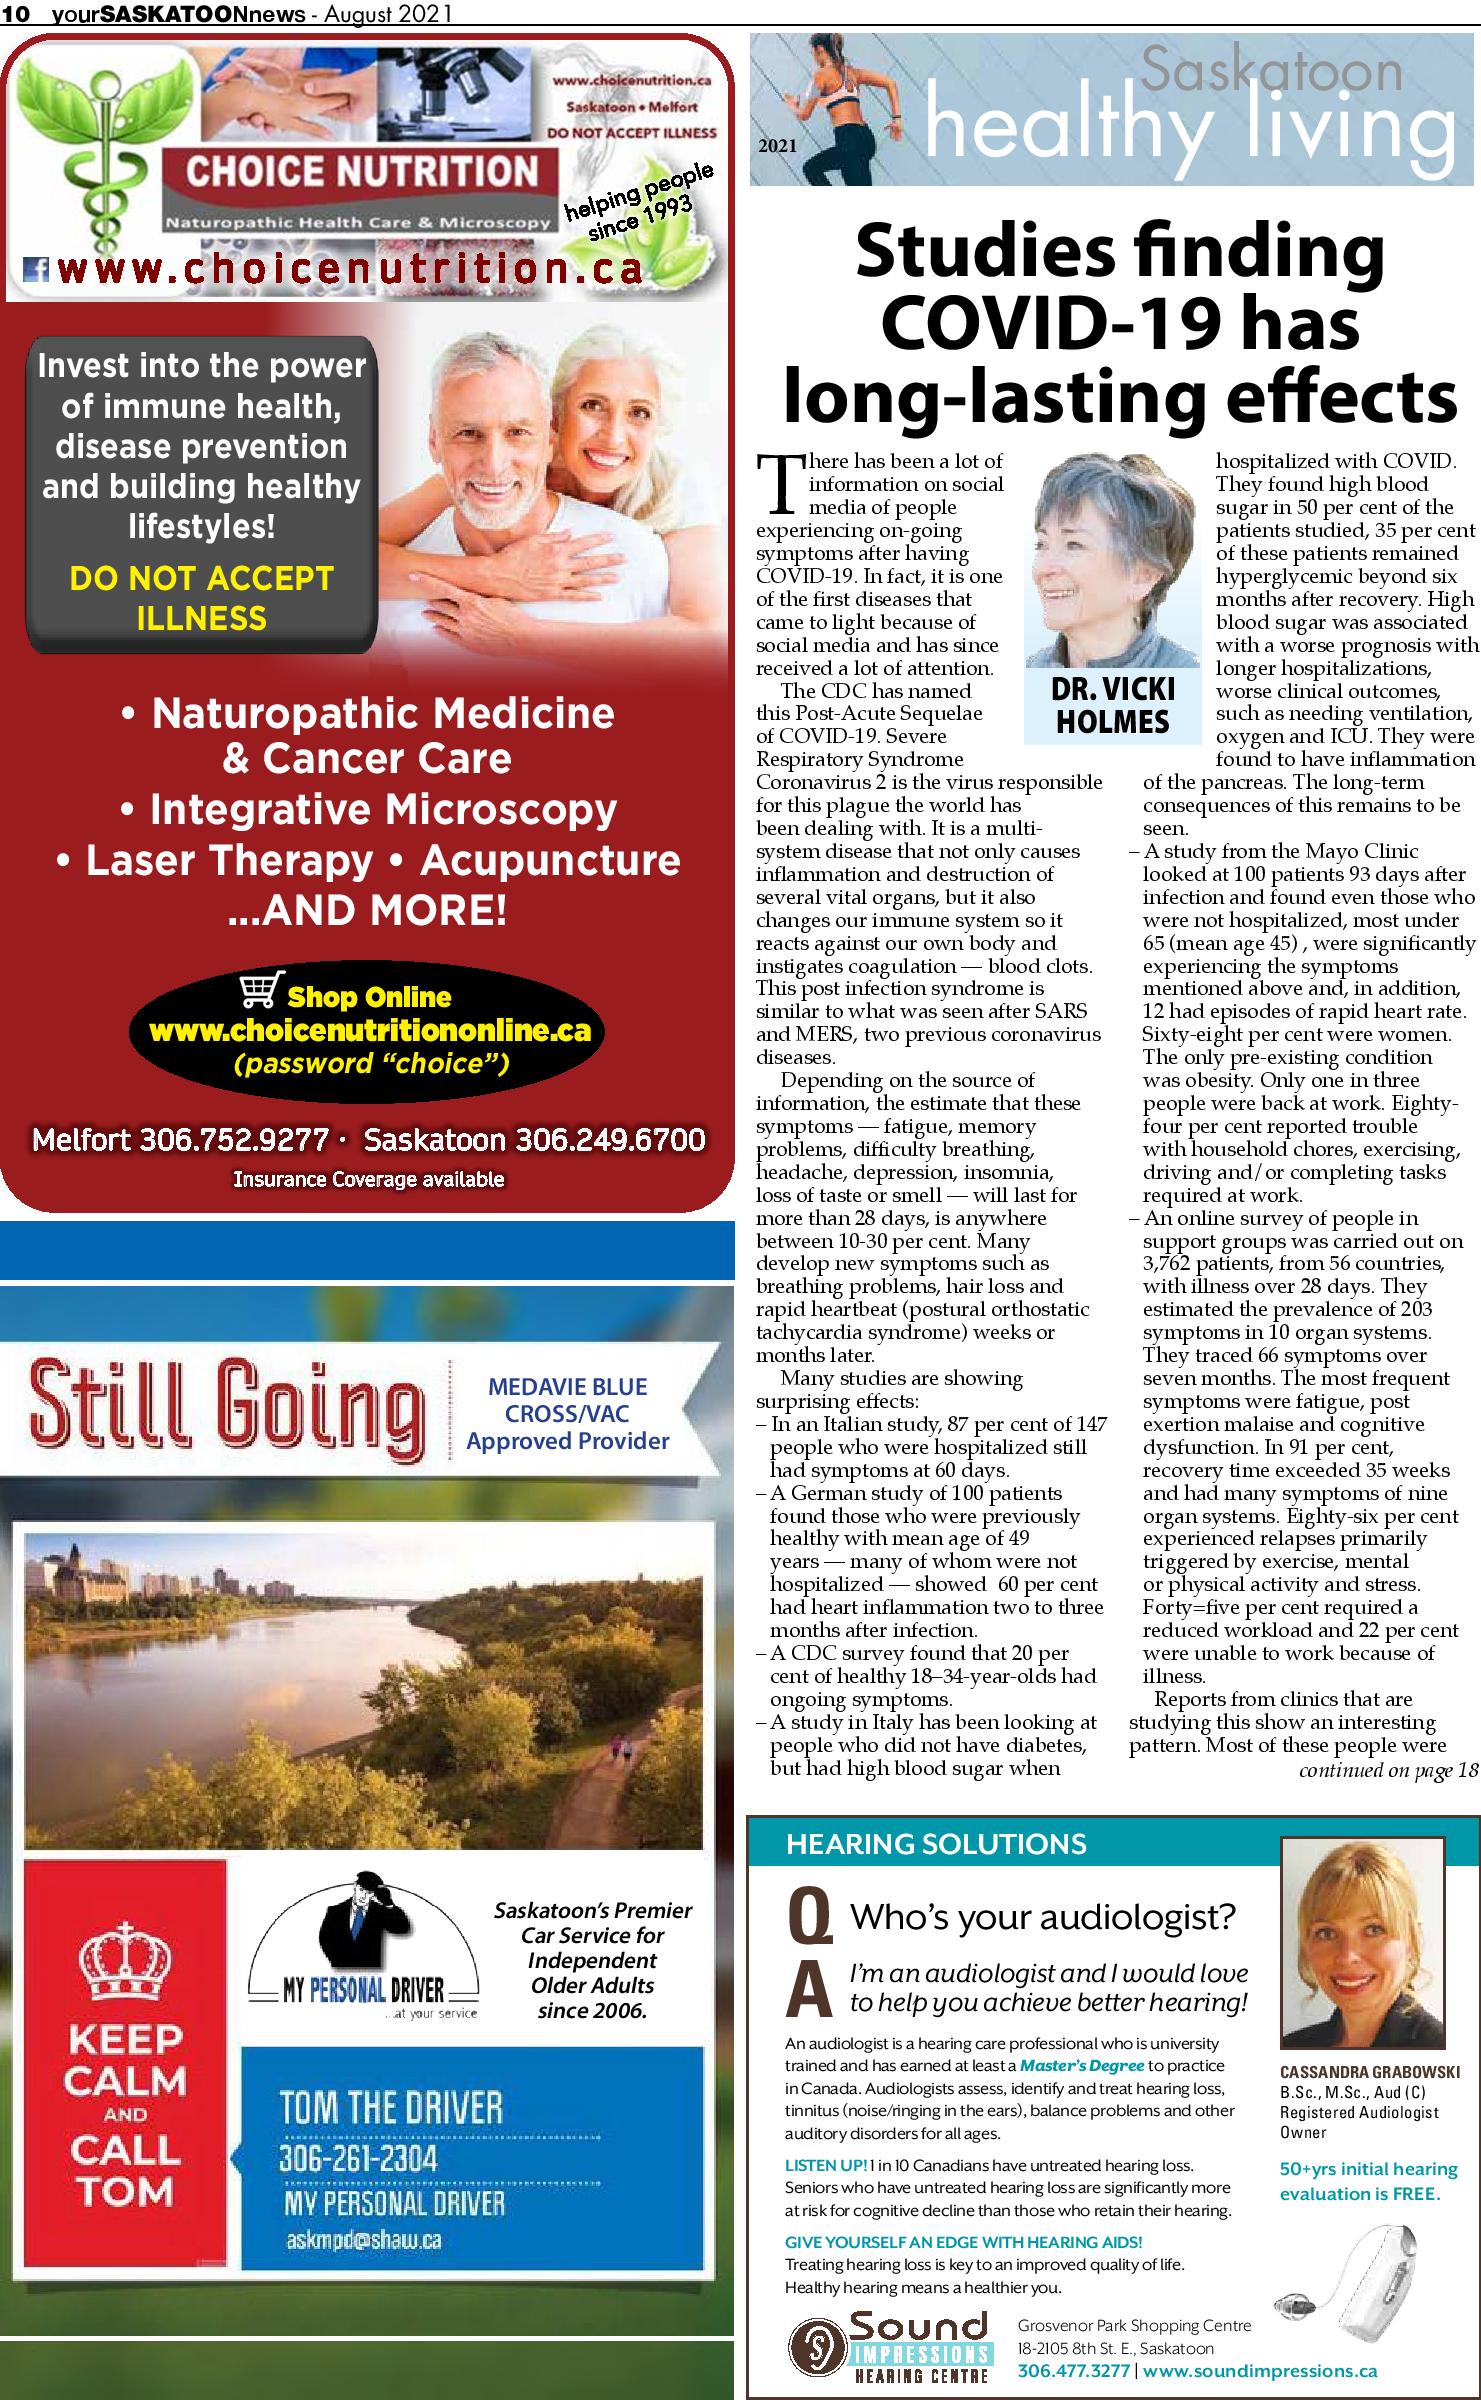 YSN Aug 2021 newspaper-page-010